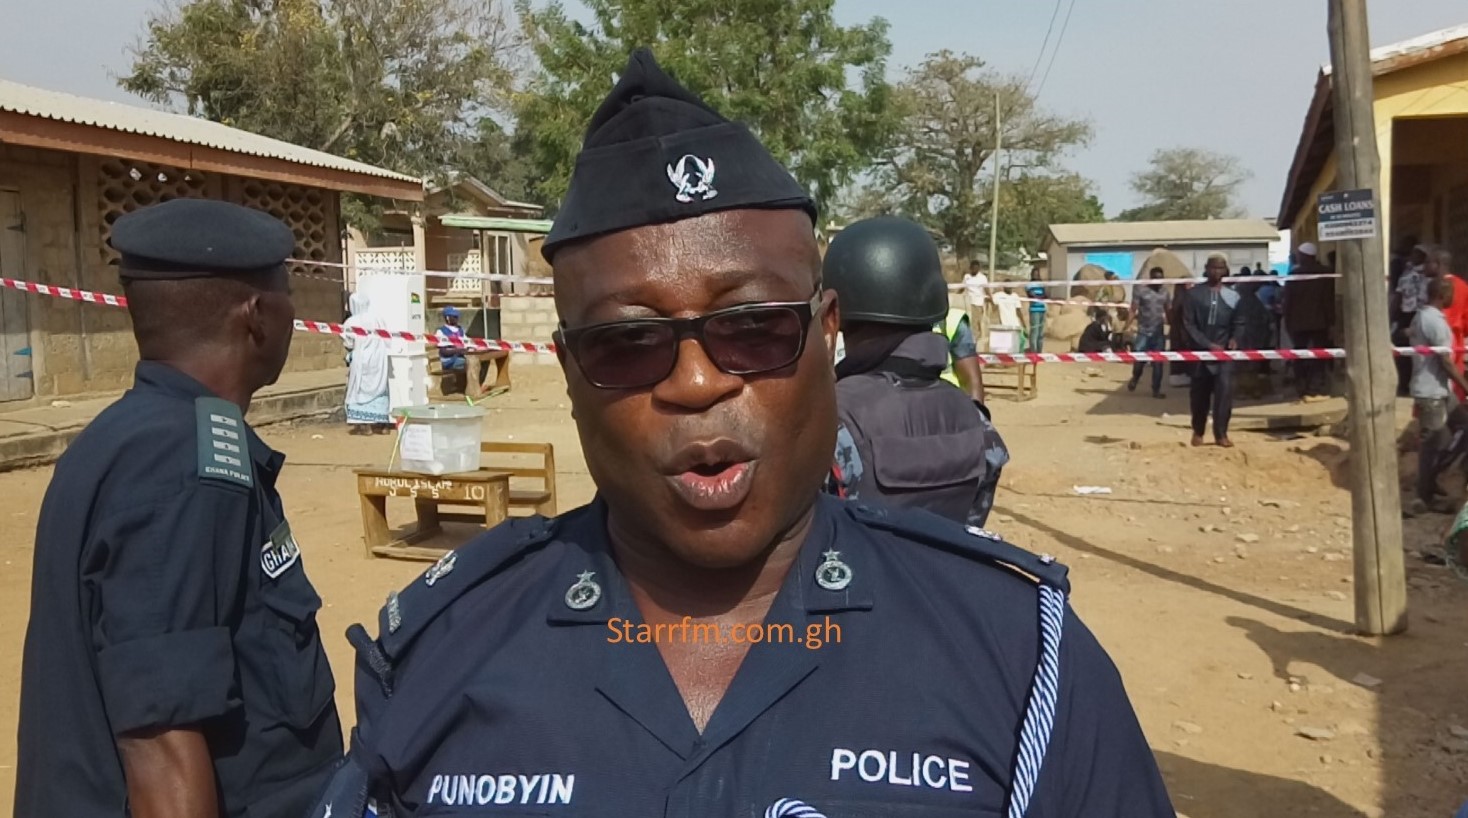 Bolgatanga Municipal Police Commander, Chief Supt. Samuel Tibil Punobyin, is calling for more police-public partnership.